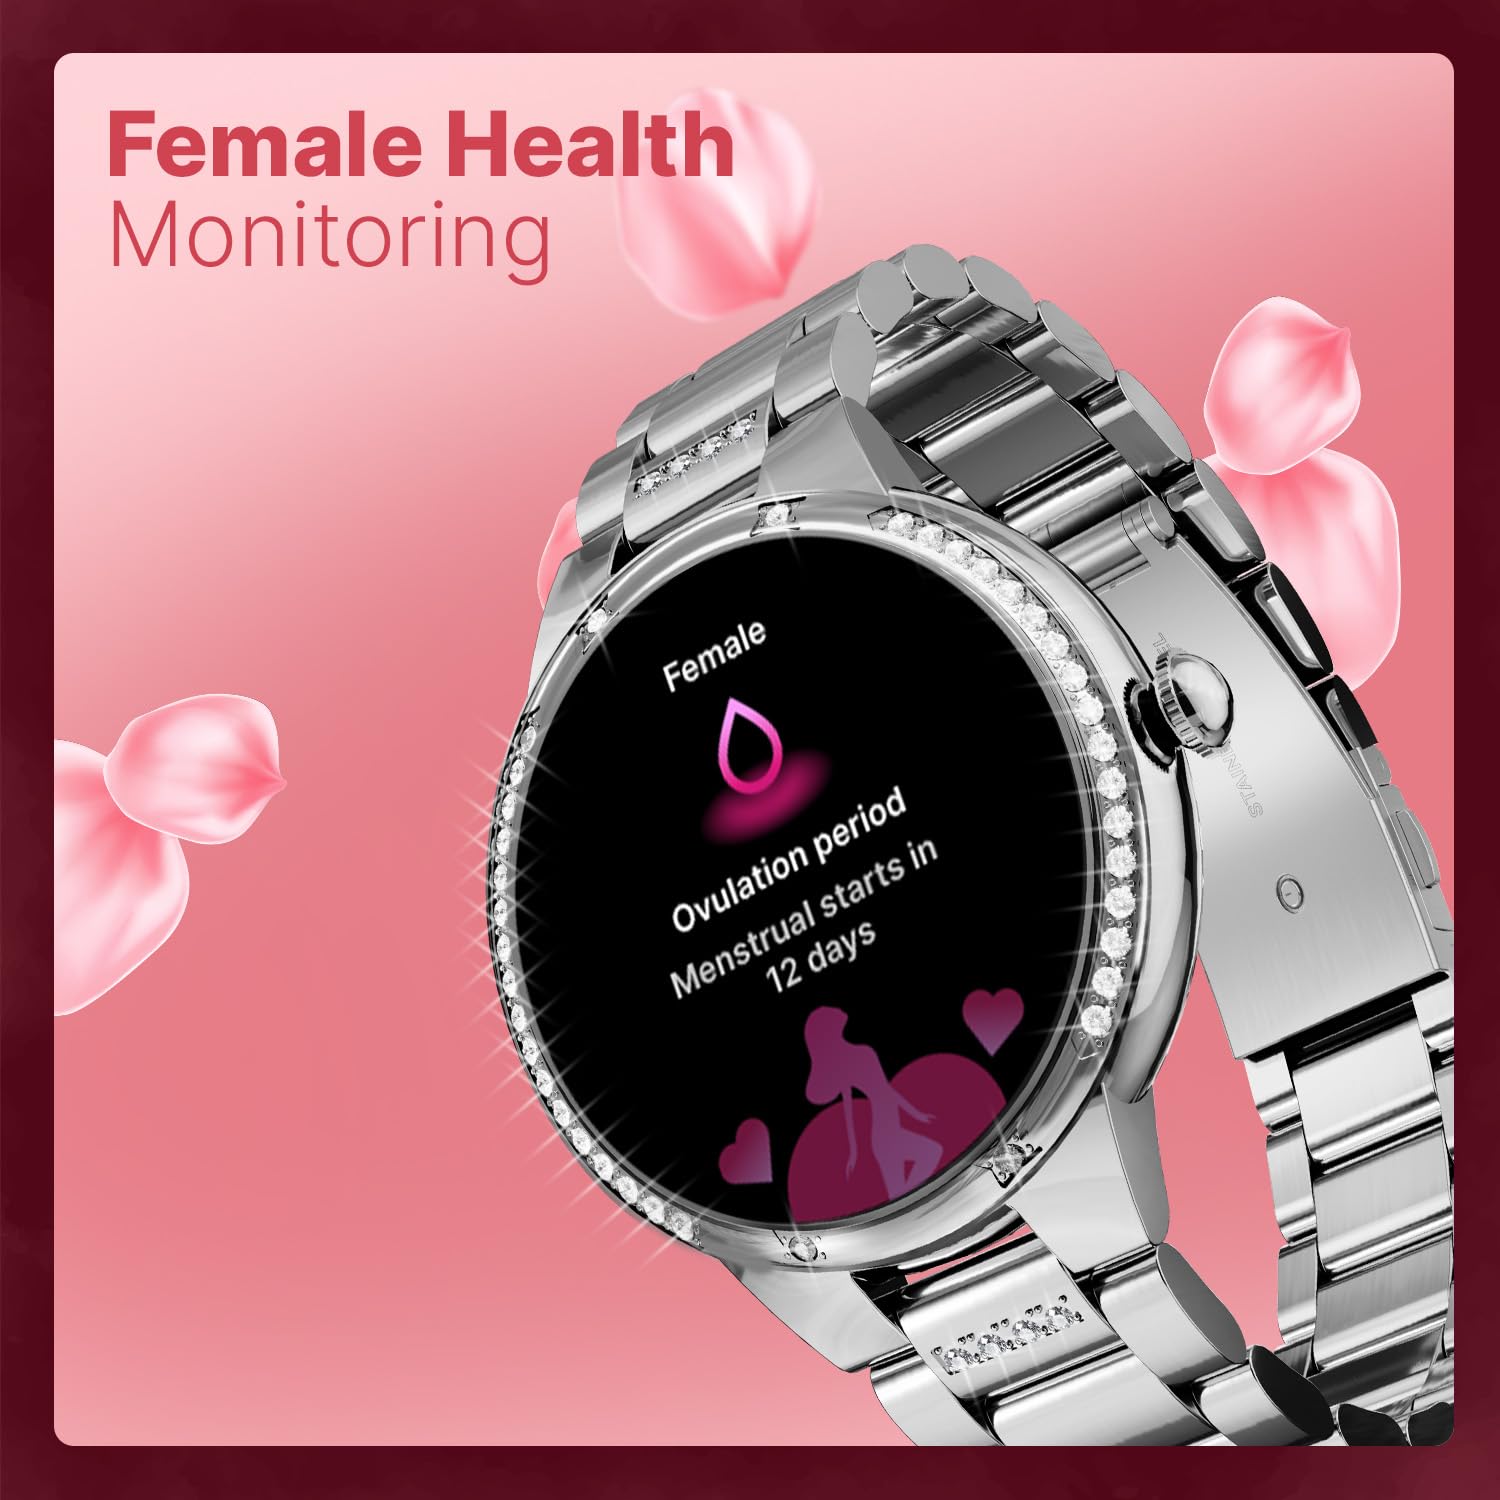 Female Health Monitoring